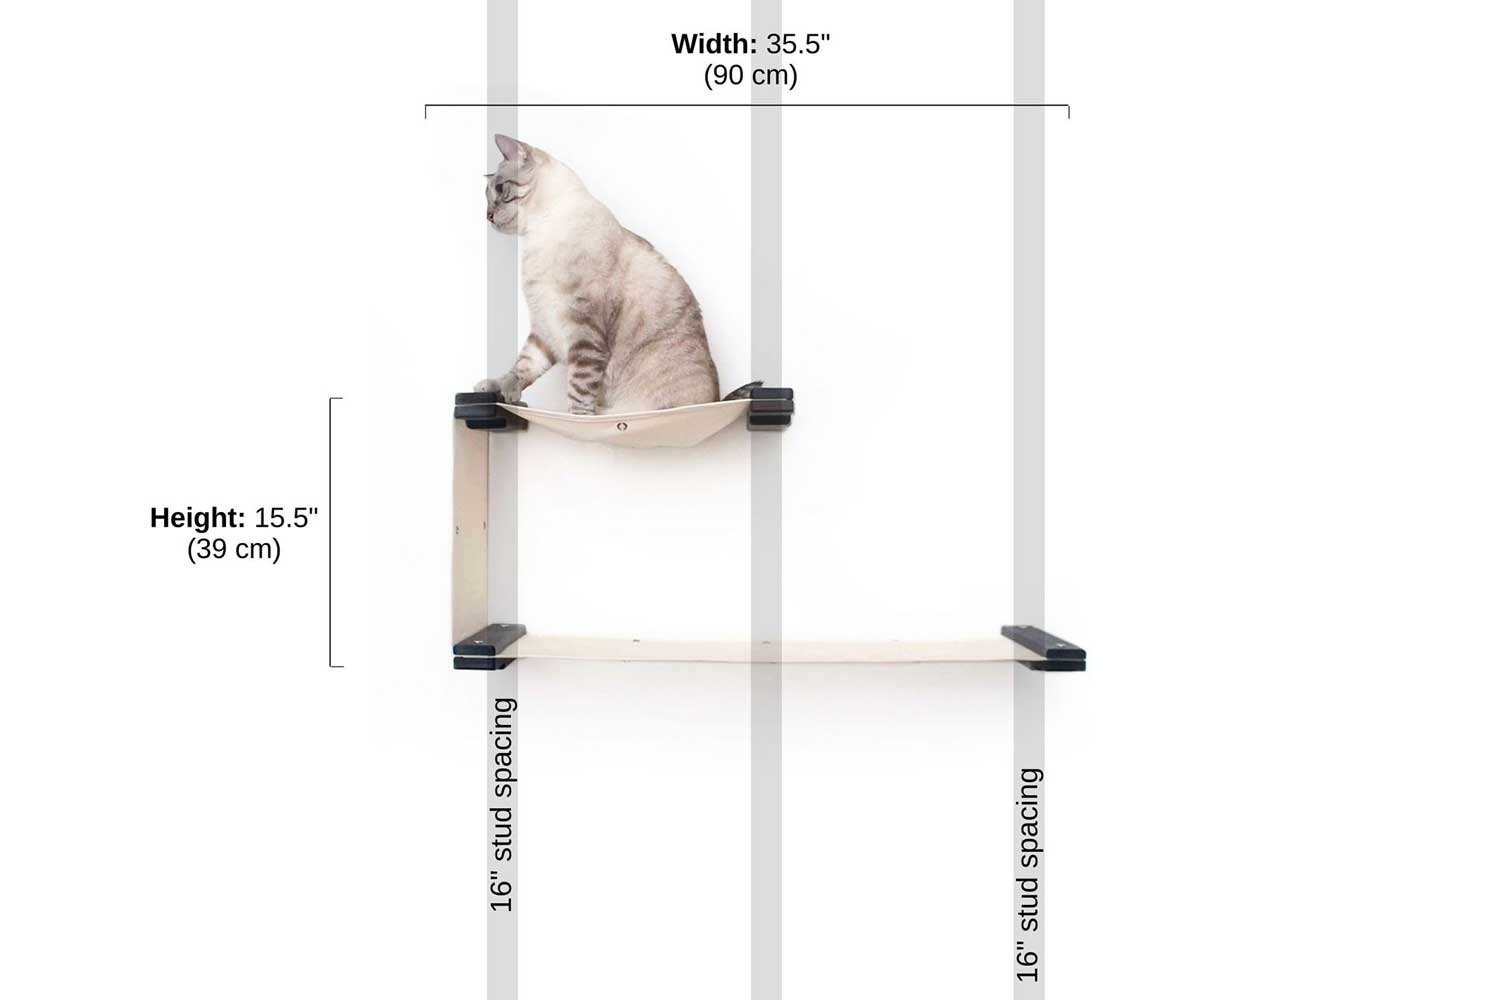 The Double Decker Cat Hammock measurement photo